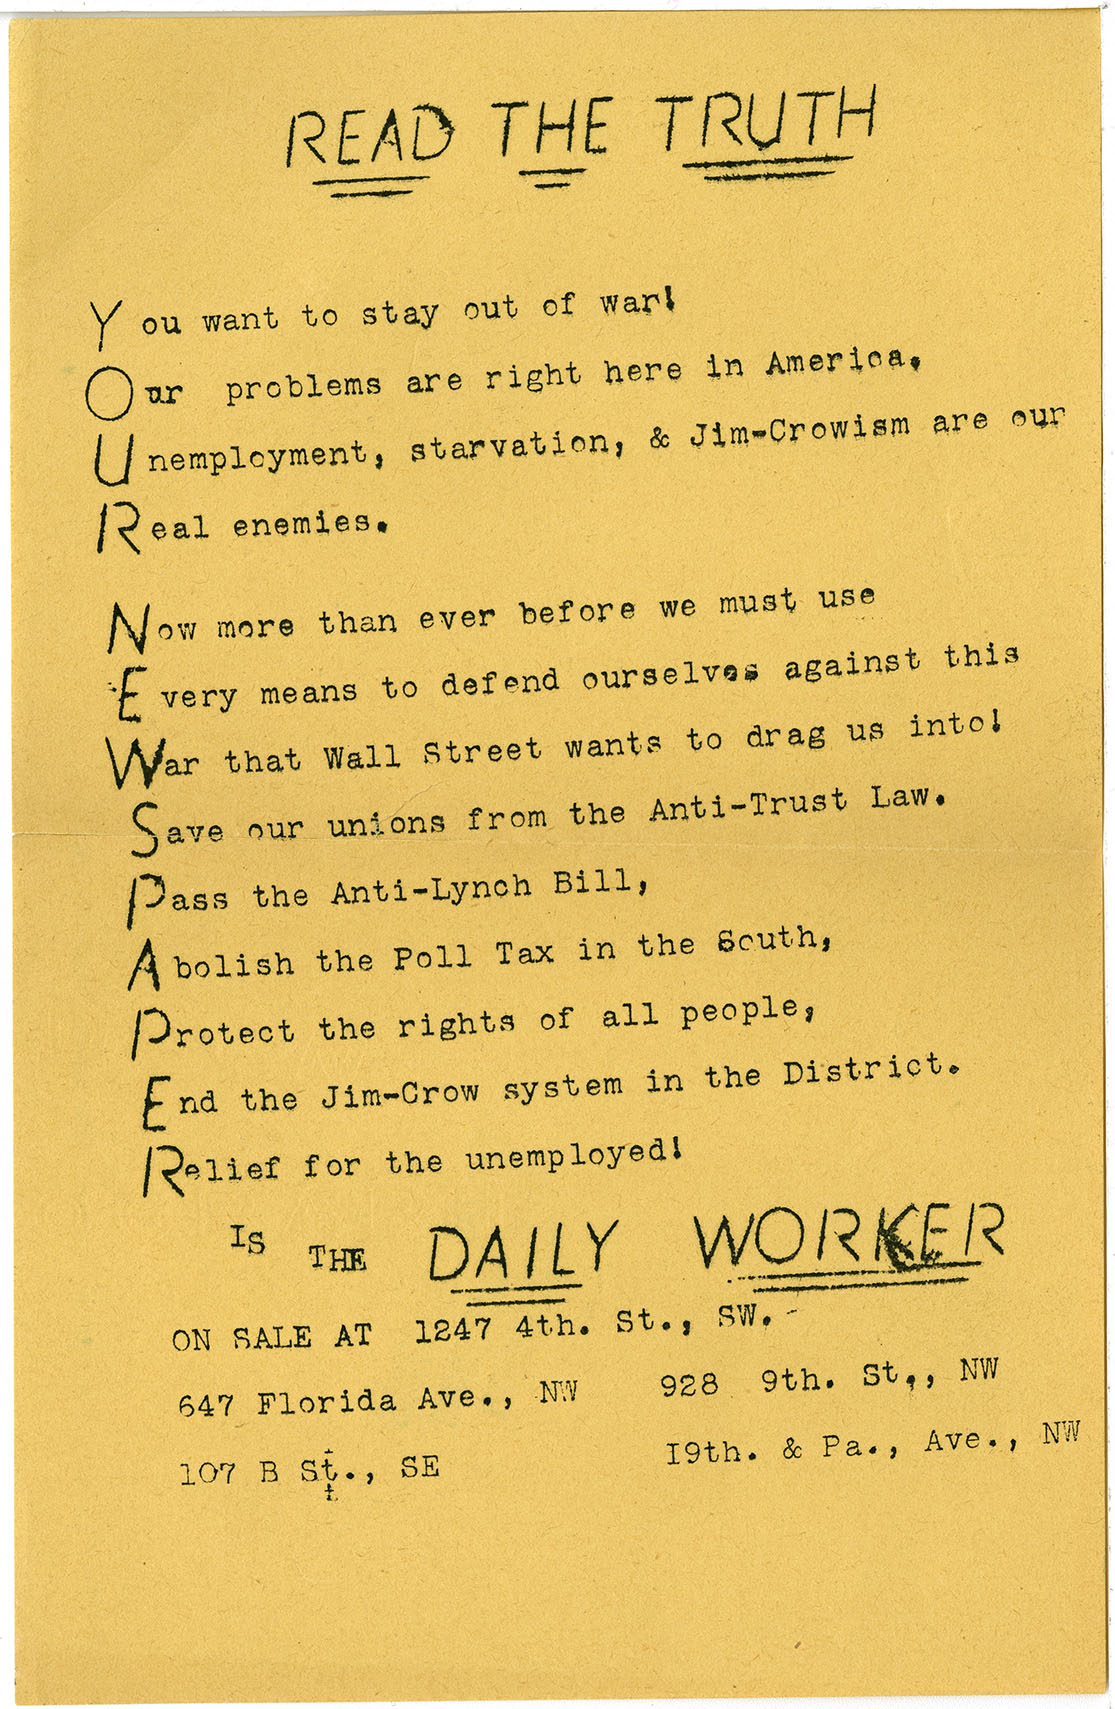 Read the Truth, Daily Worker (New York)undatedWorld War II Vertical File